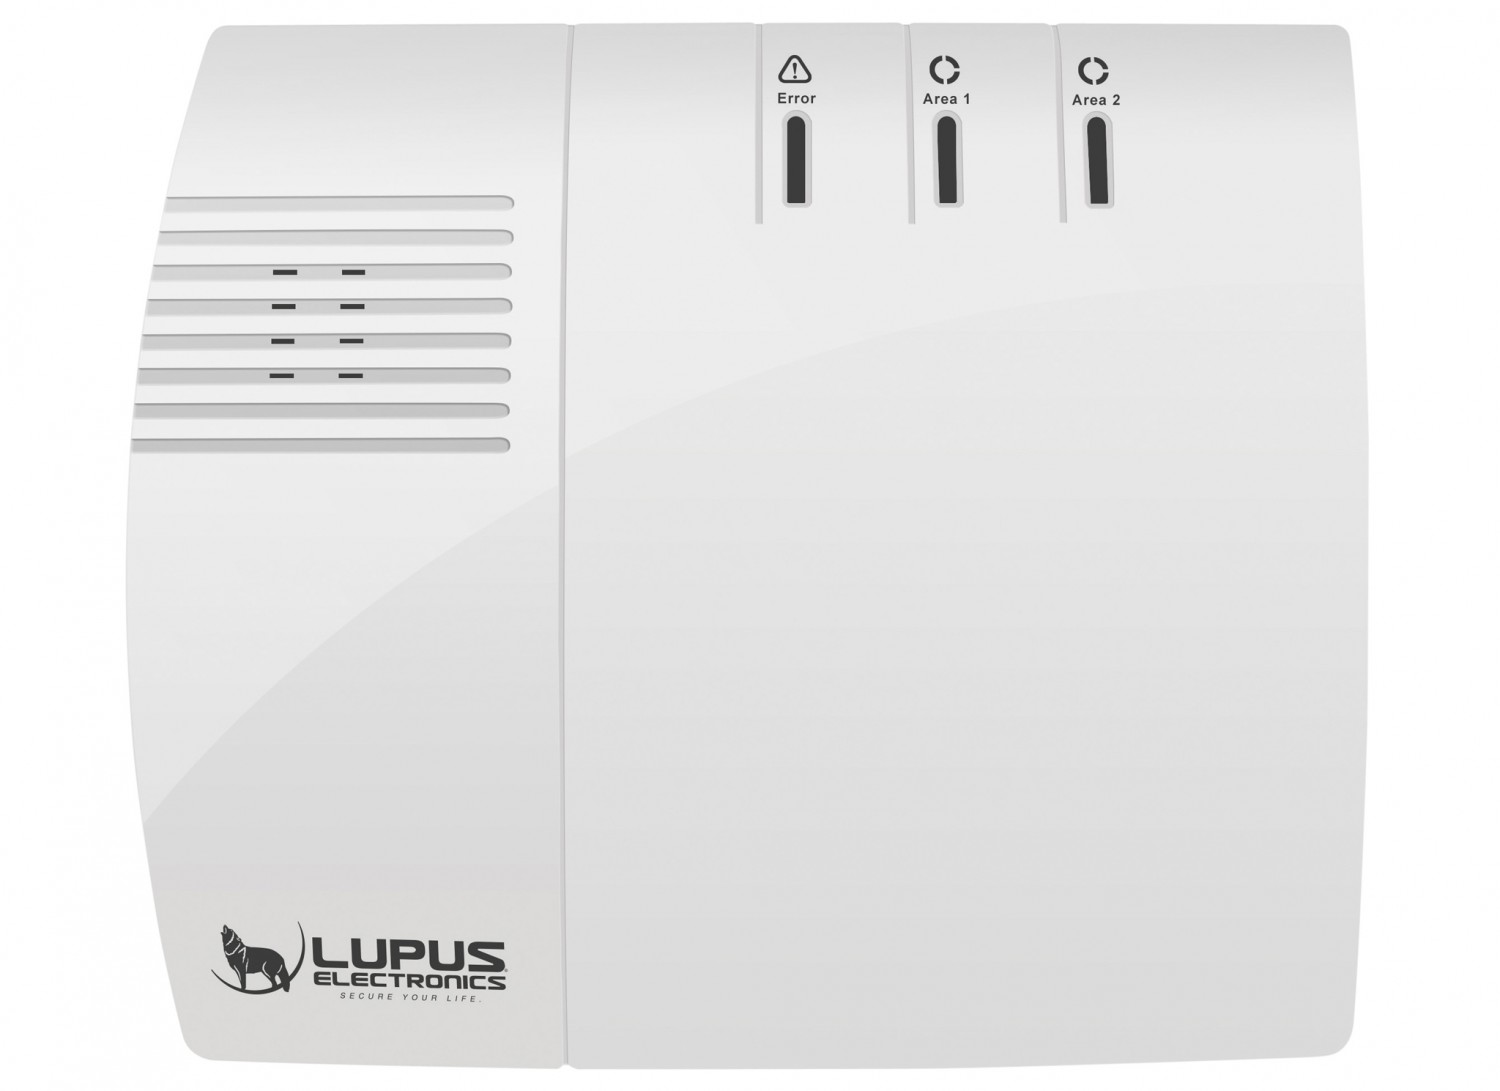 Komplettsysteme (Smart Home) Lupusec Smart-Home-System im Test, Bild 5